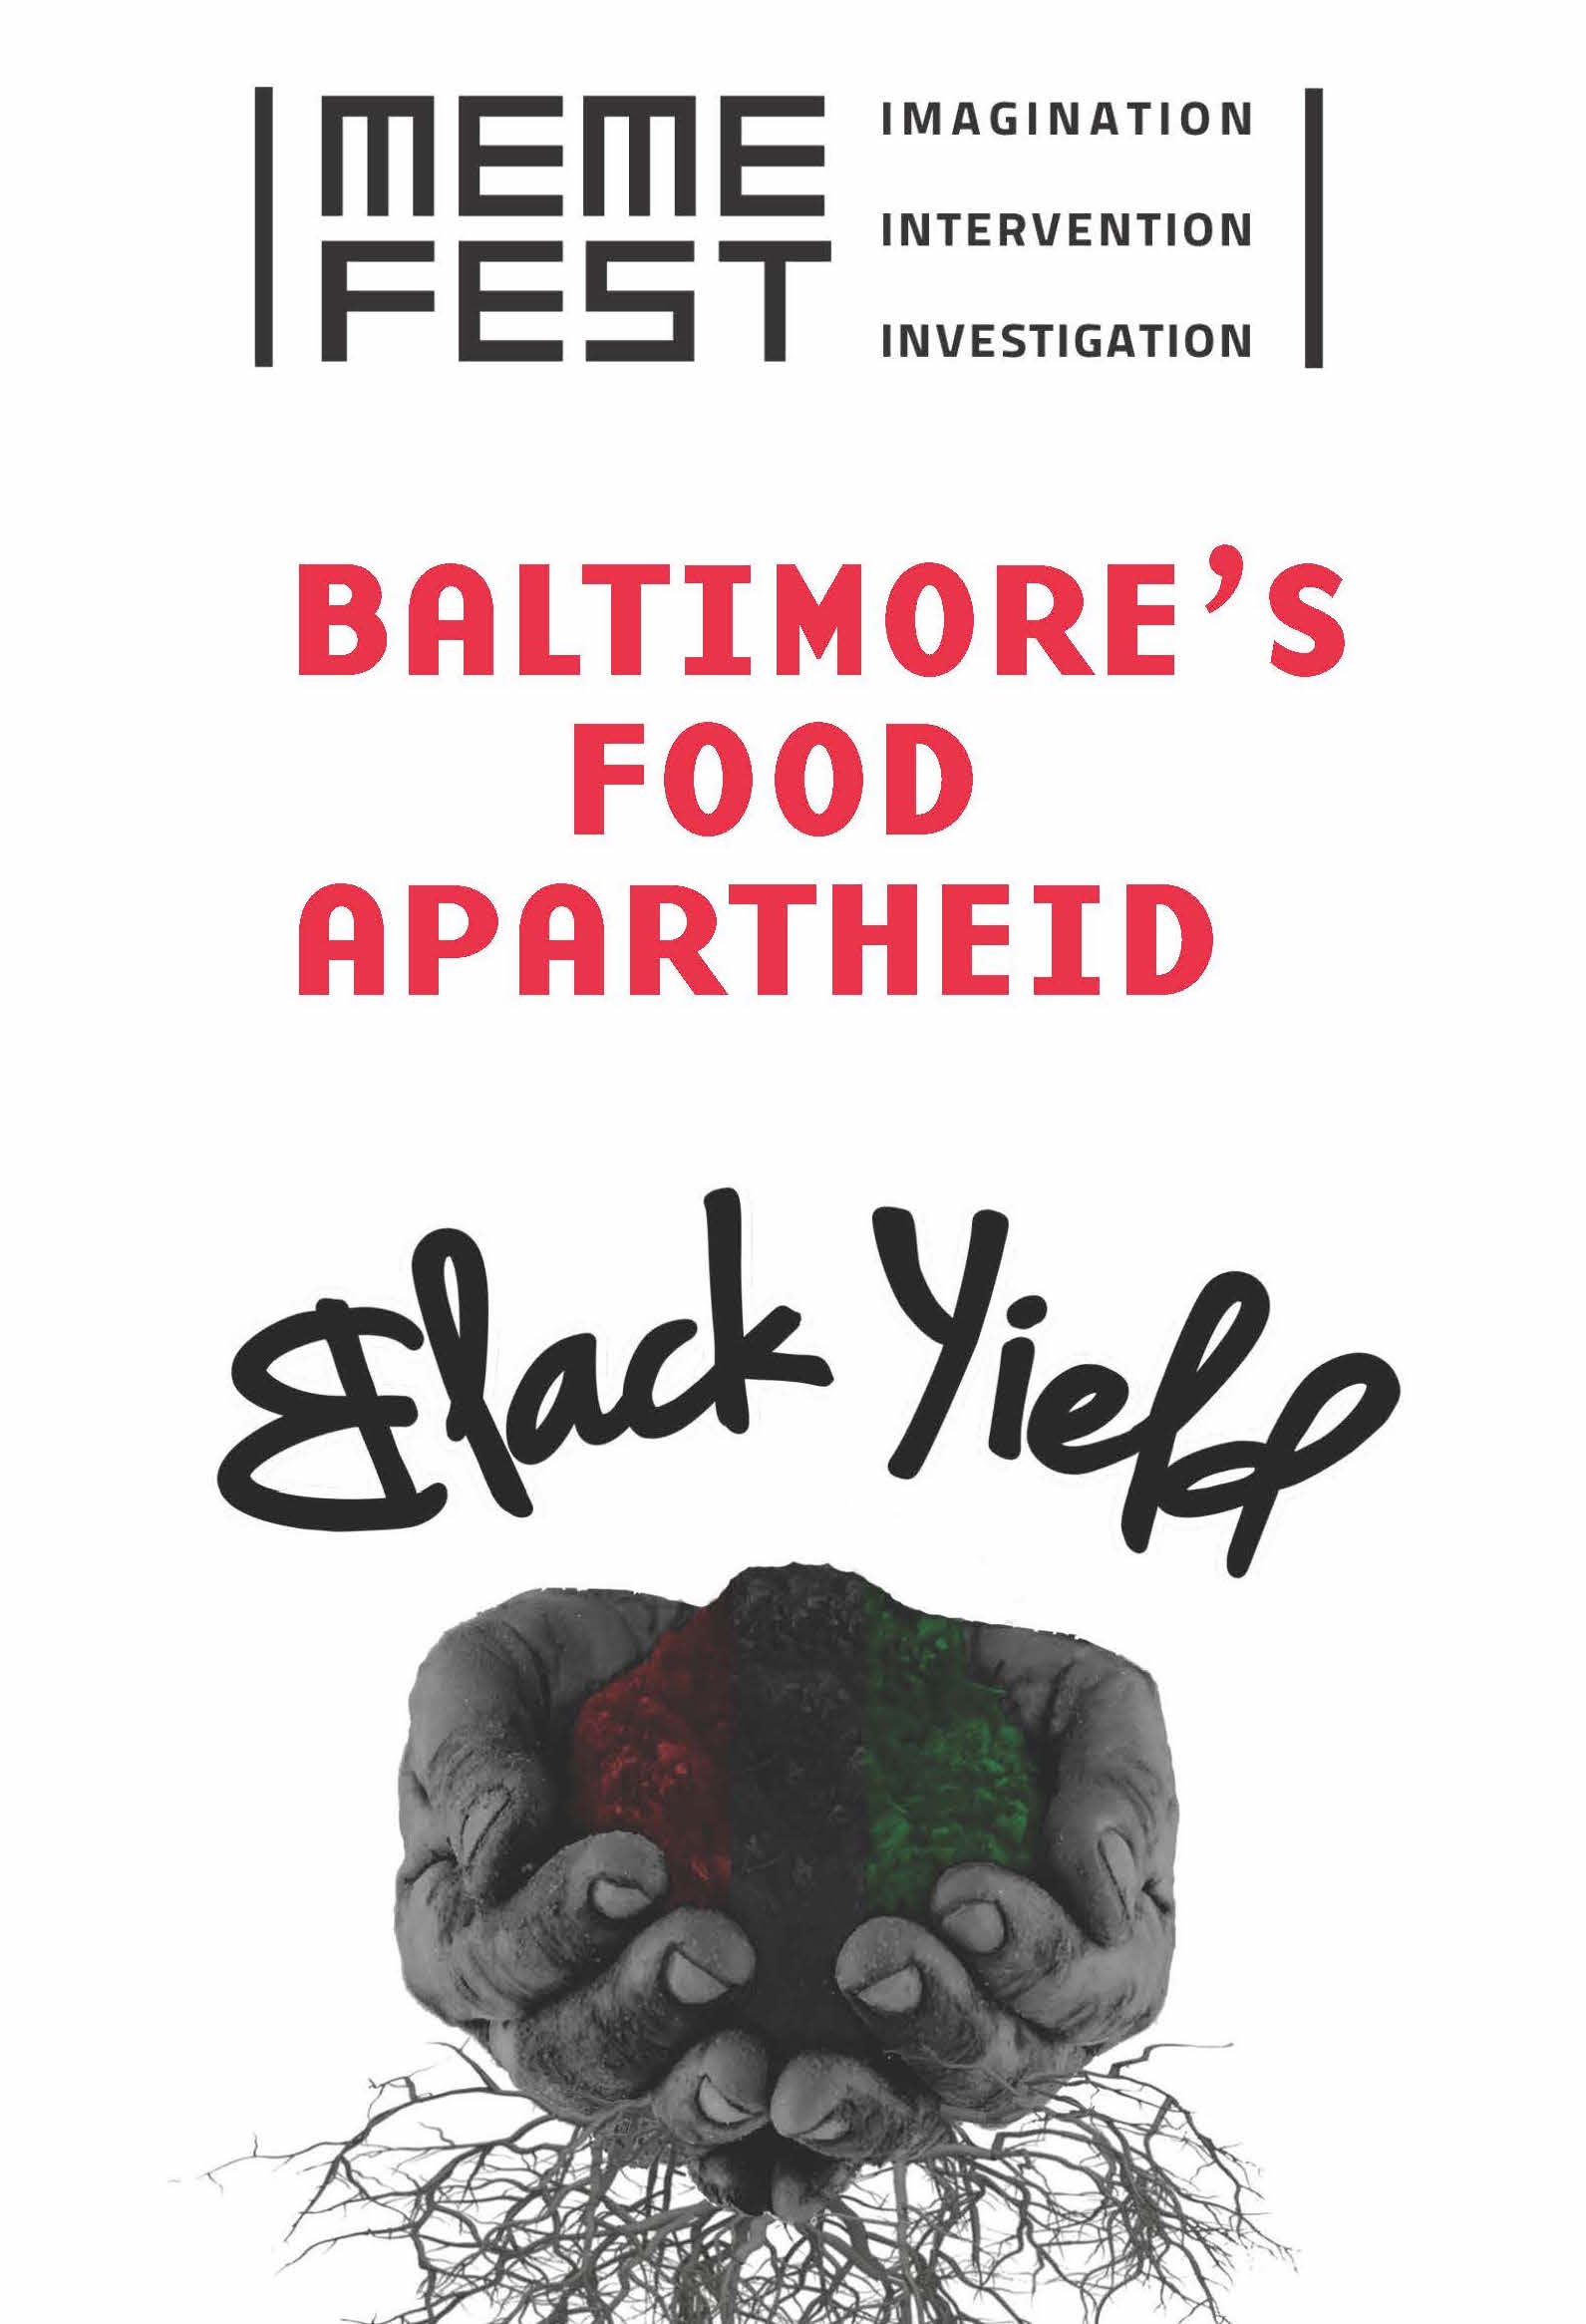 Baltimore’s Food Apartheid: A pre-workshop preparation session 